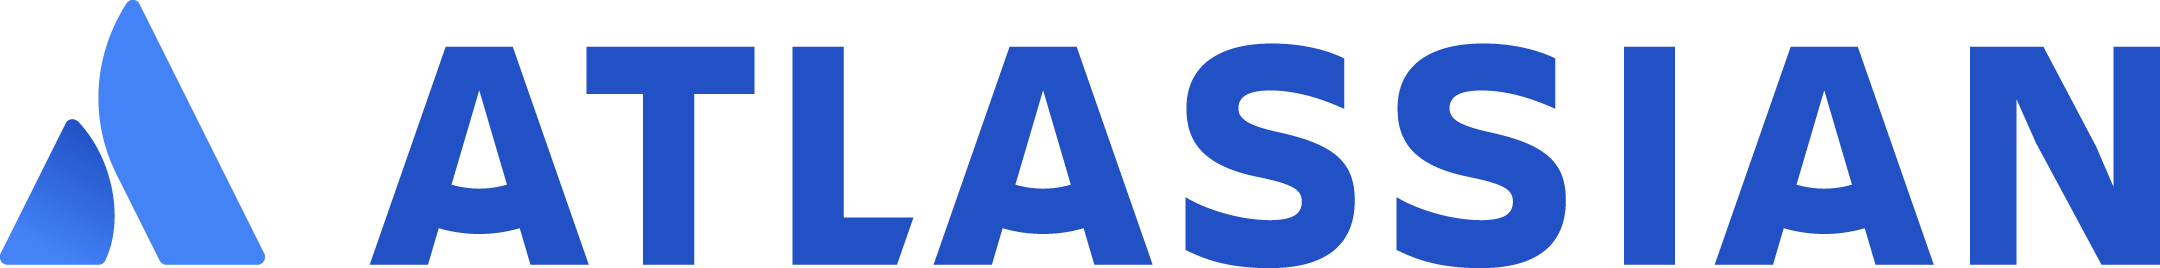 atlassian logo.png